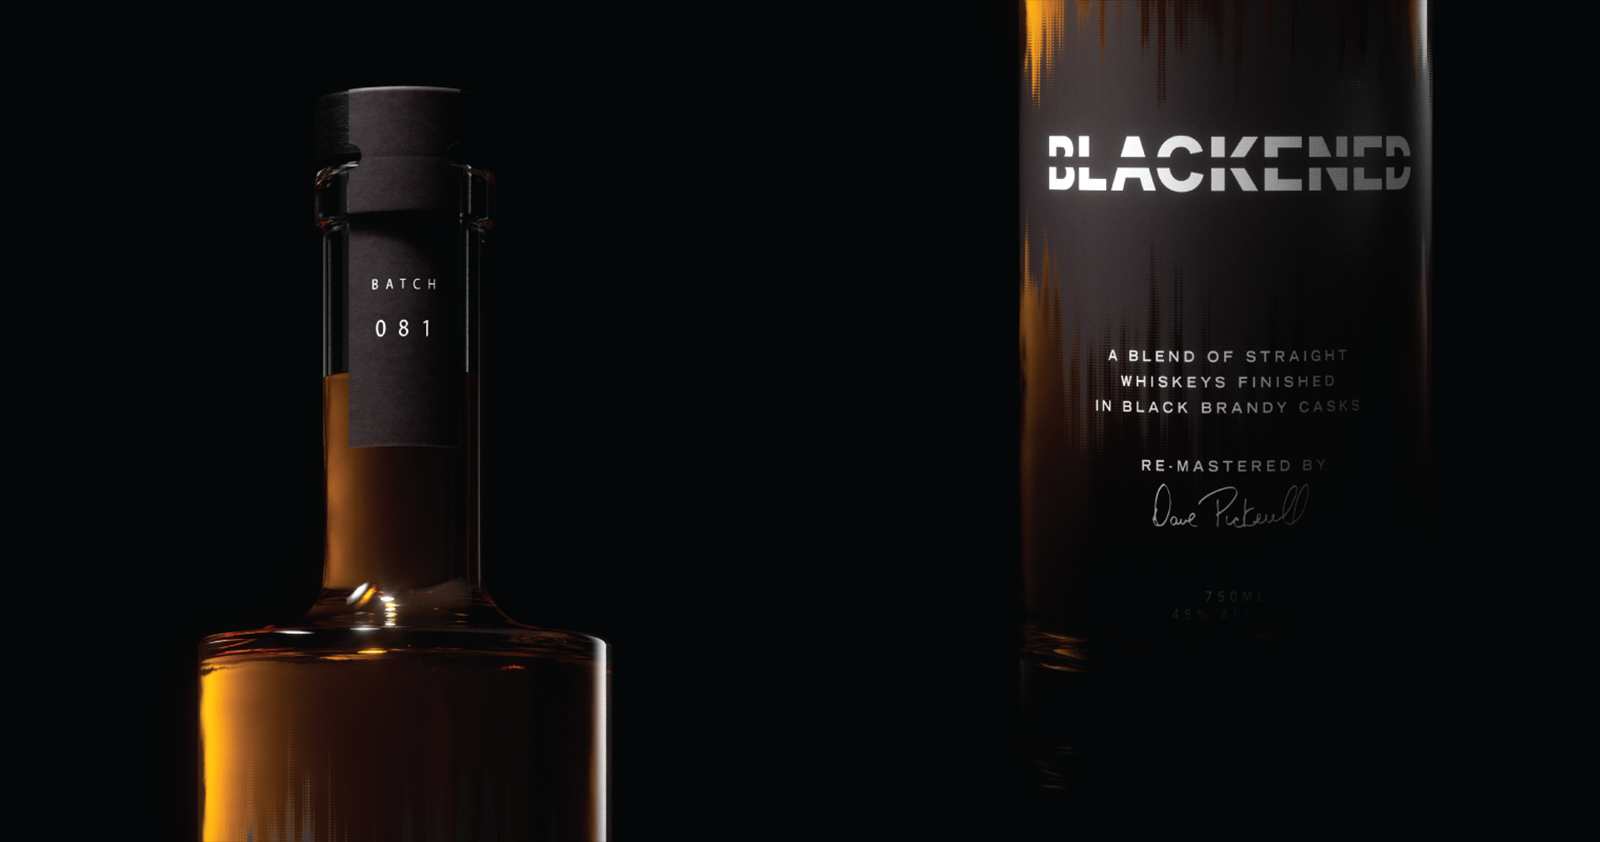 Le whisky "Blackened" de Metallica - Photo 4